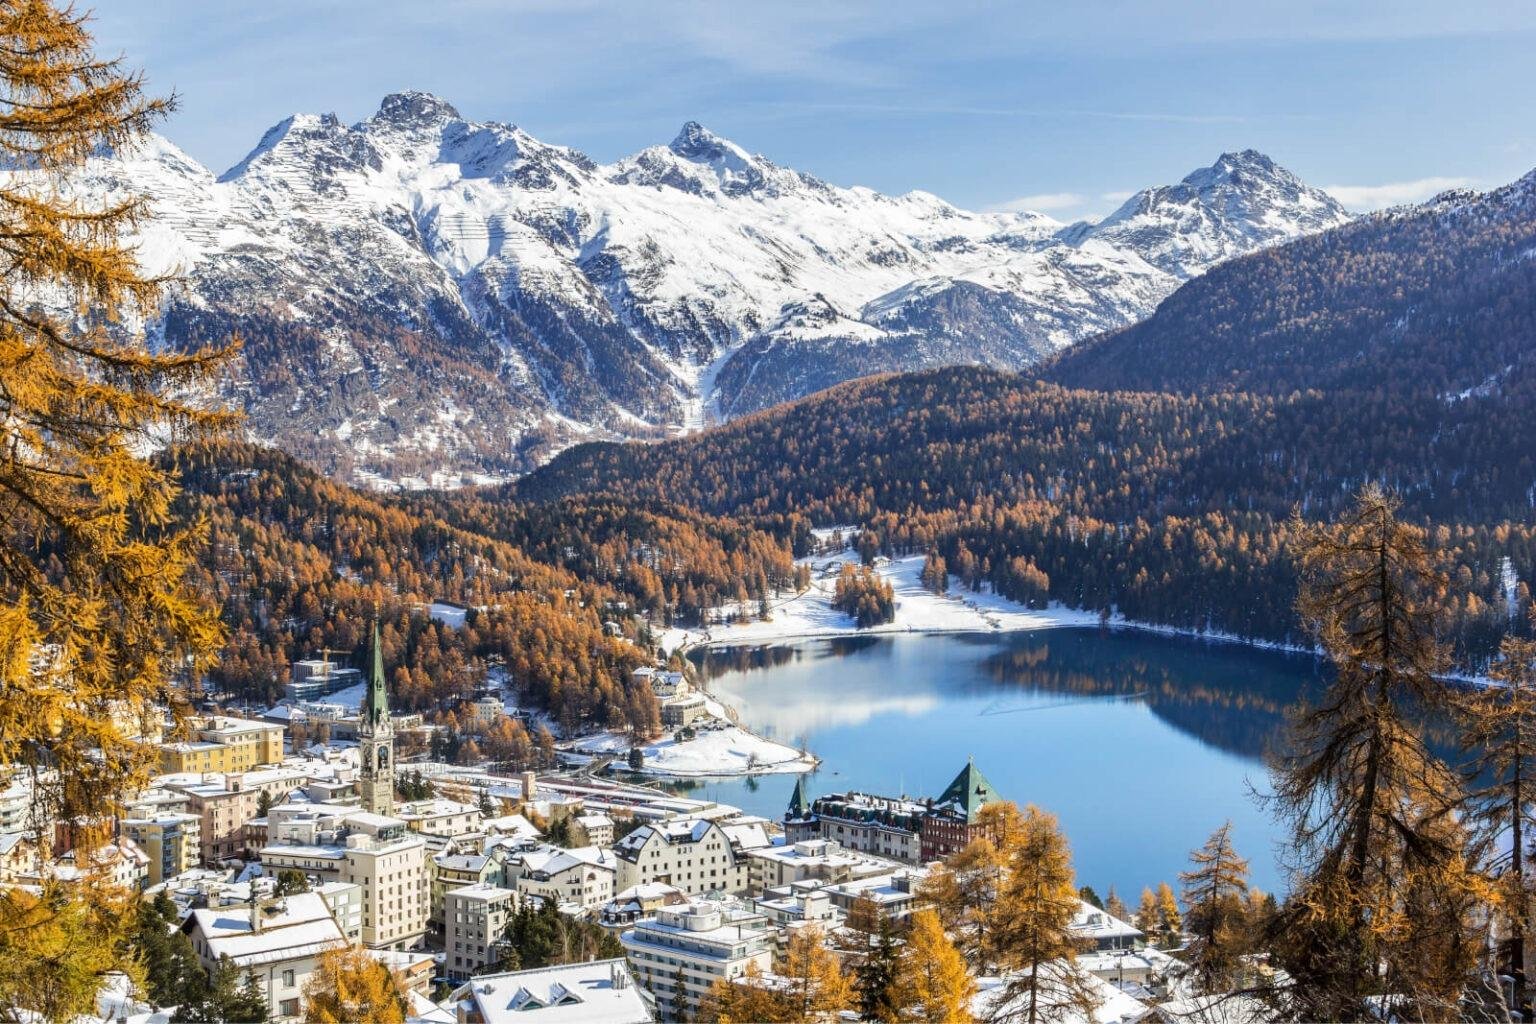 10. St. Moritz, Switzerland